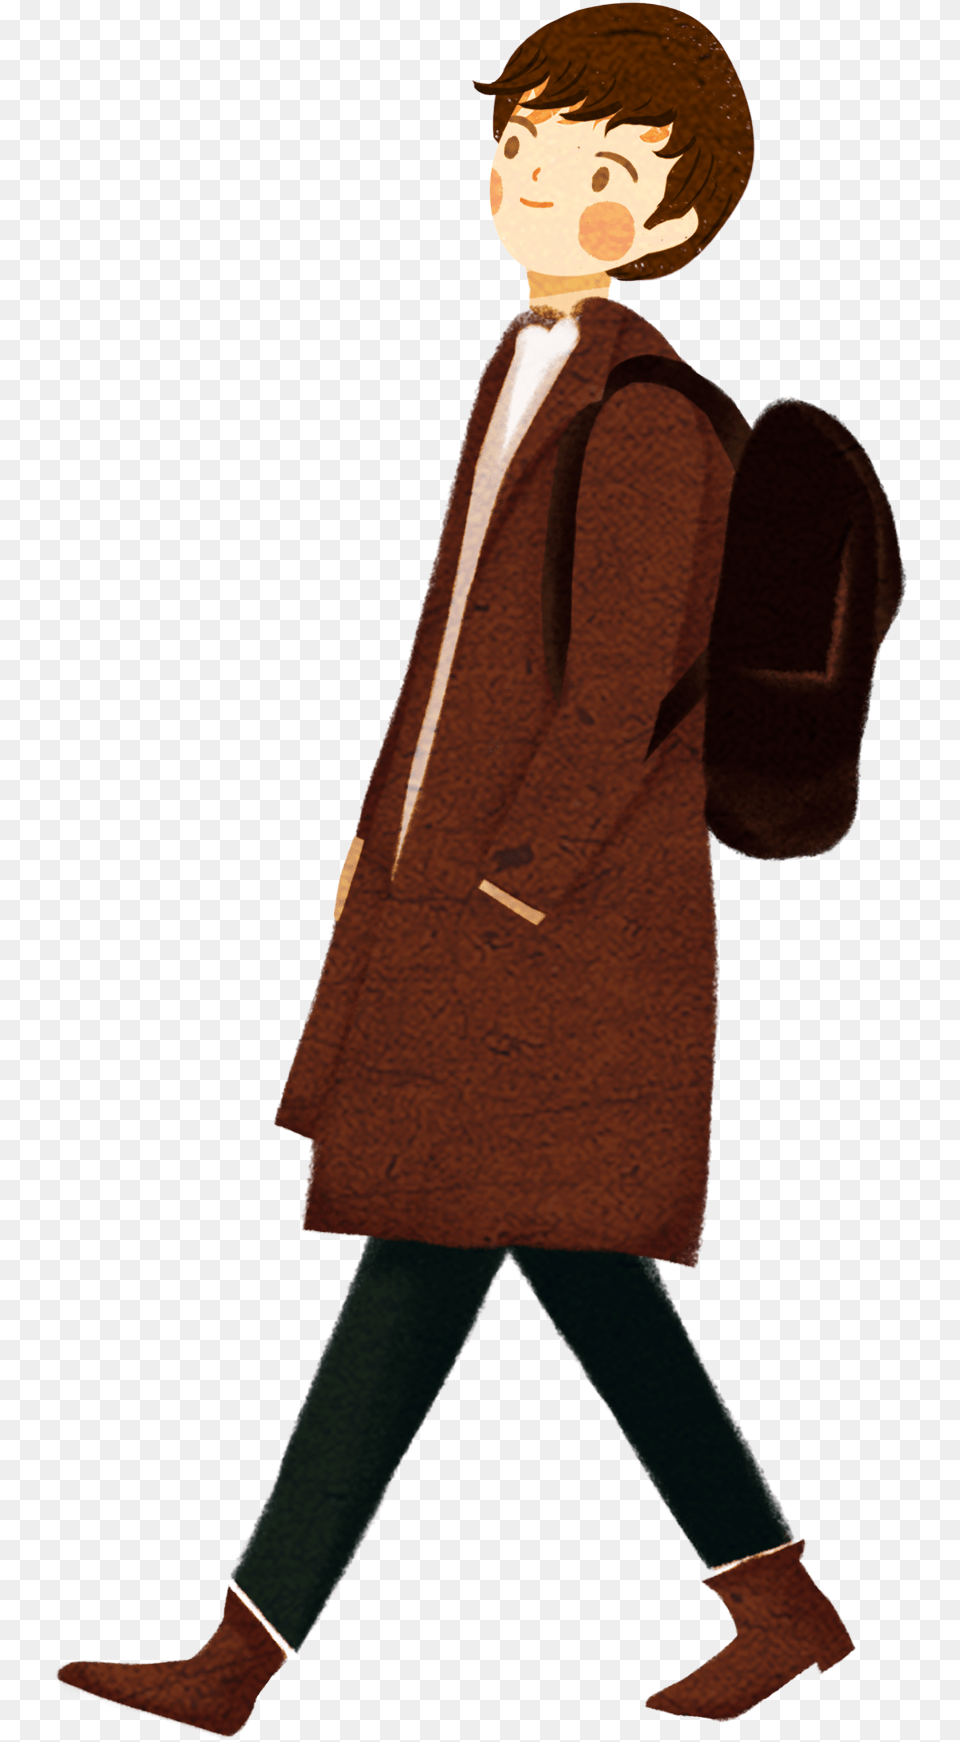 Cartoon Hand Drawn Autumn Man And Psd Walking Man, Clothing, Coat, Adult, Person Png Image